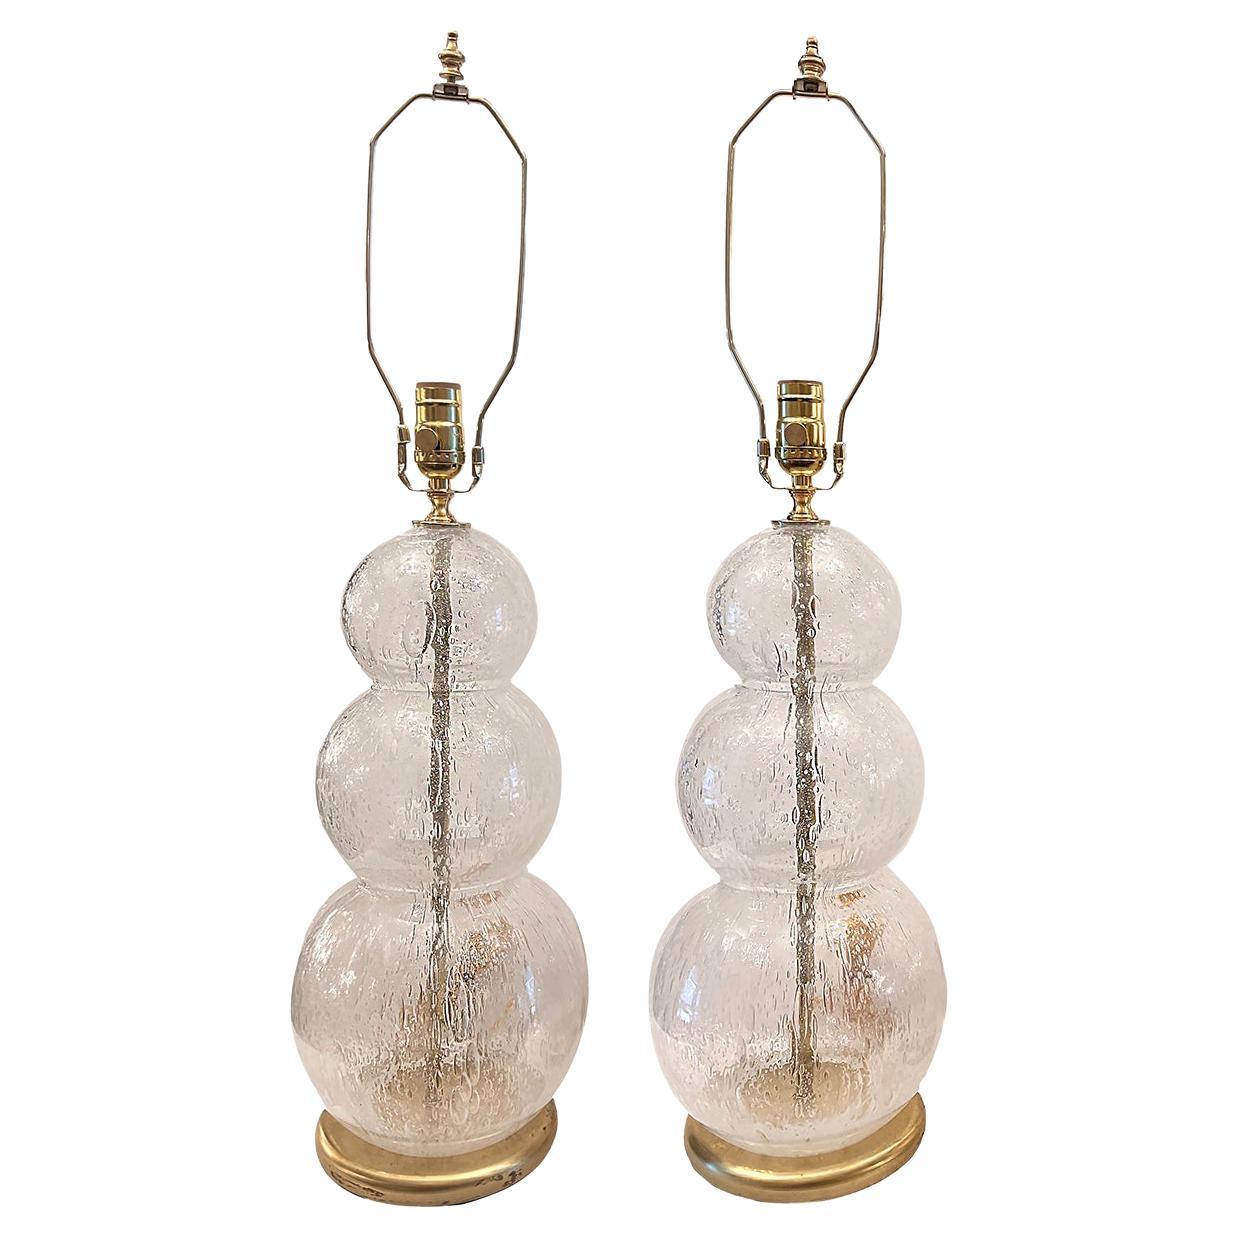 Pair of Italian Blown Glass Lamps